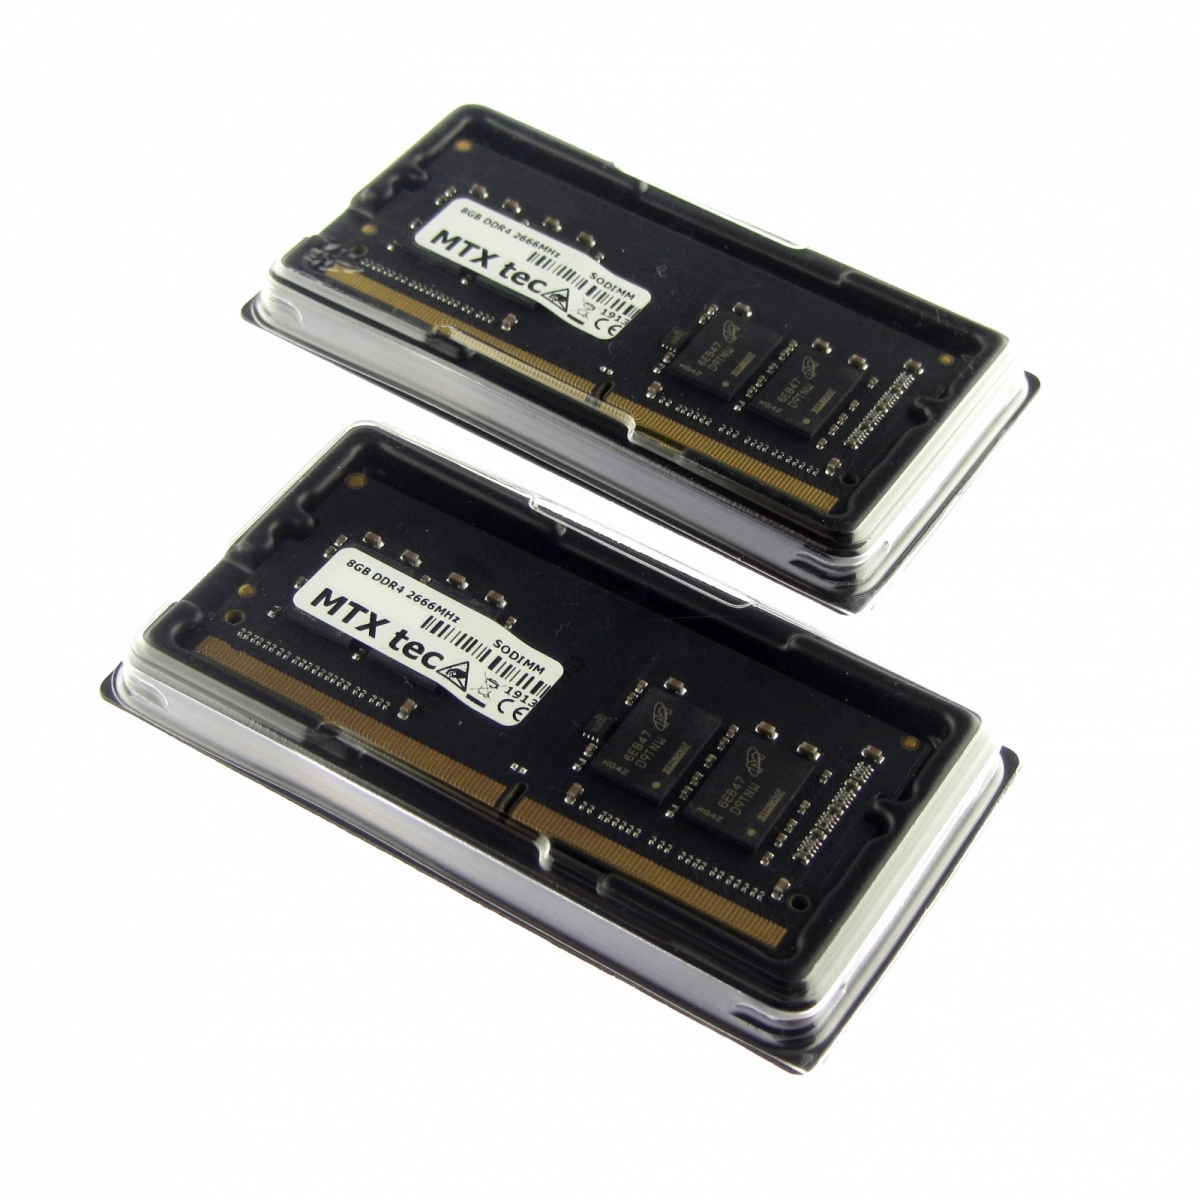 MTXtec 16GB Kit 2x 8GB Arbeitsspeicher SODIMM DDR4 PC4-21300 2666MHz 260pin